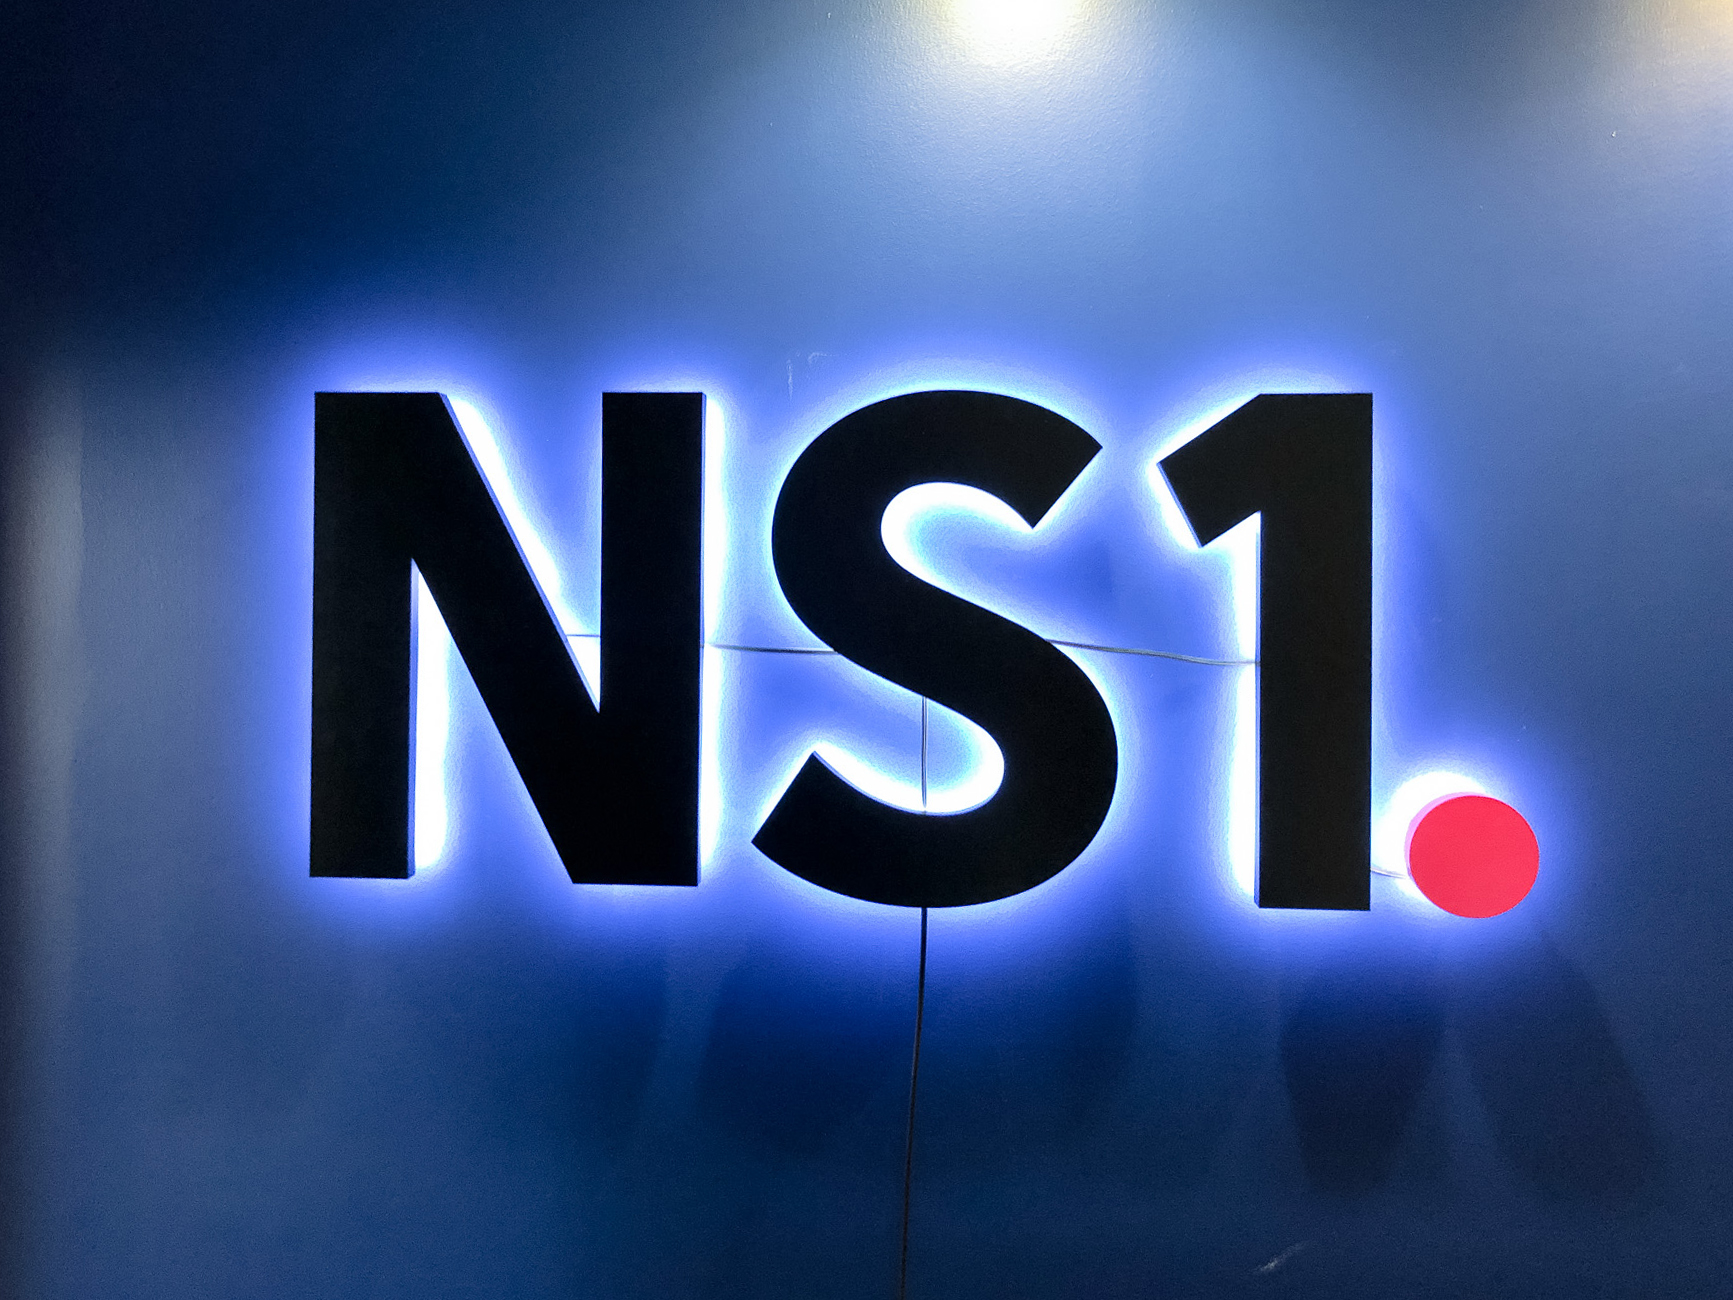 NS1 halo lit sign on dark blue wall